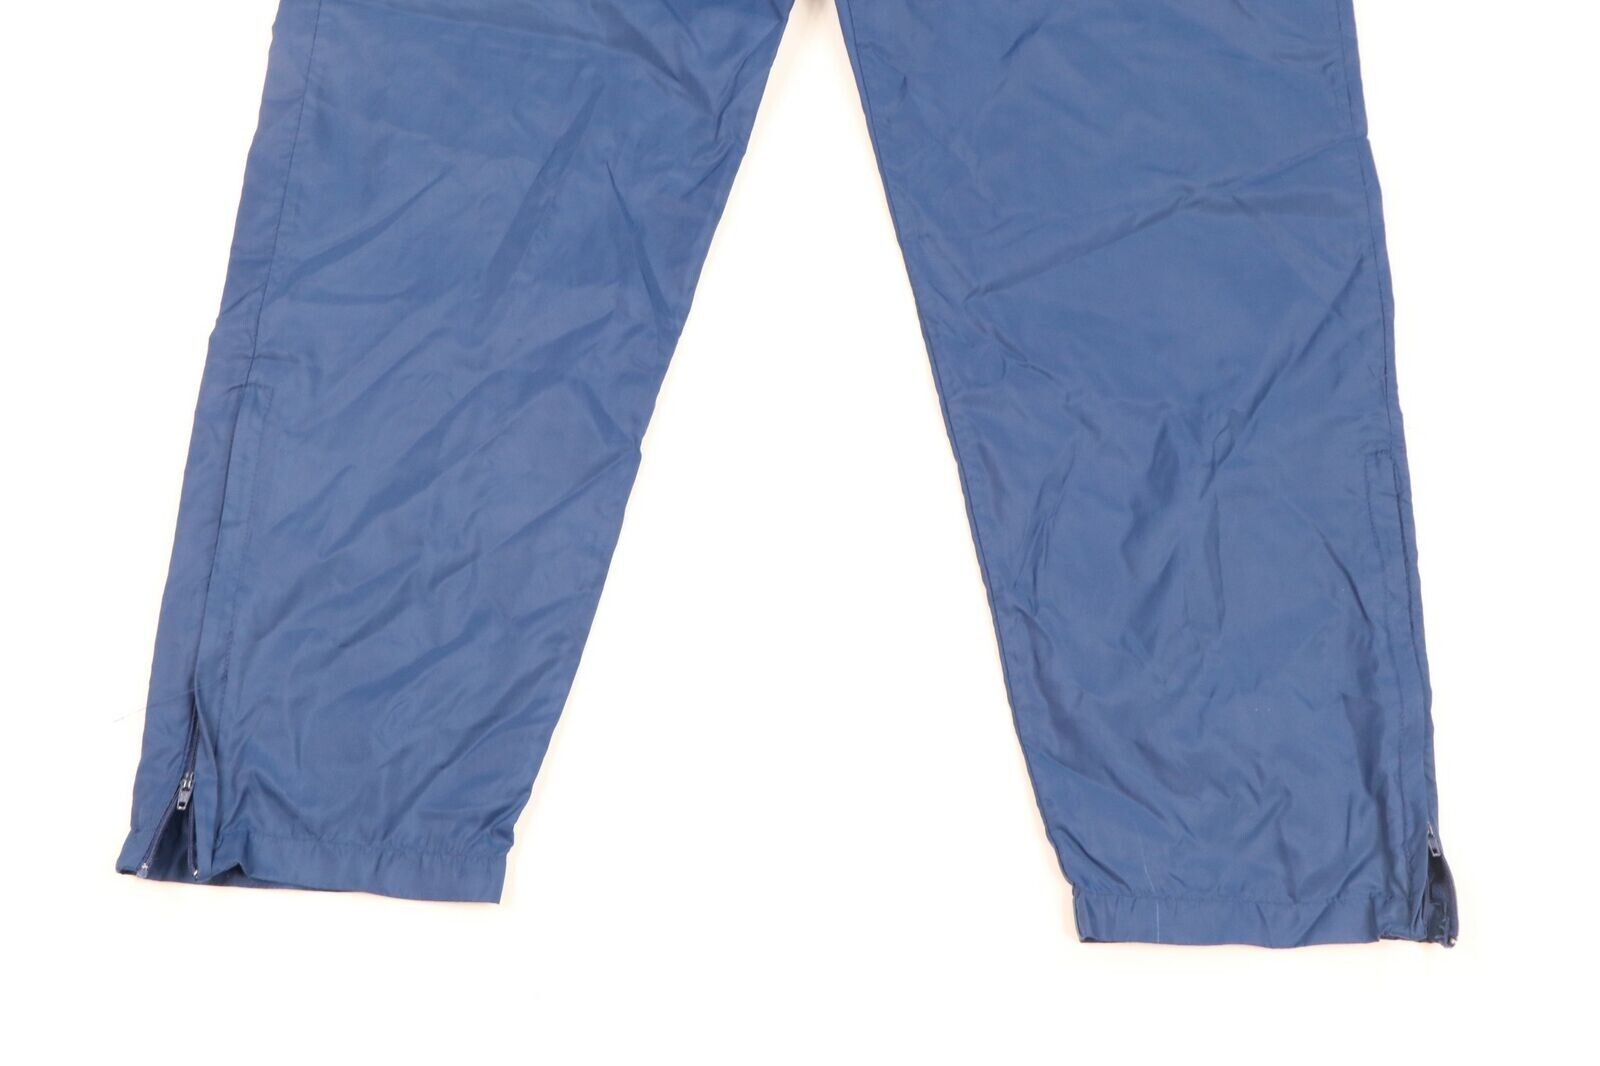 Vintage Vintage 90s Puma Spell Out Nylon Tapered Leg Pants Blue Size US 30 / EU 46 - 3 Thumbnail